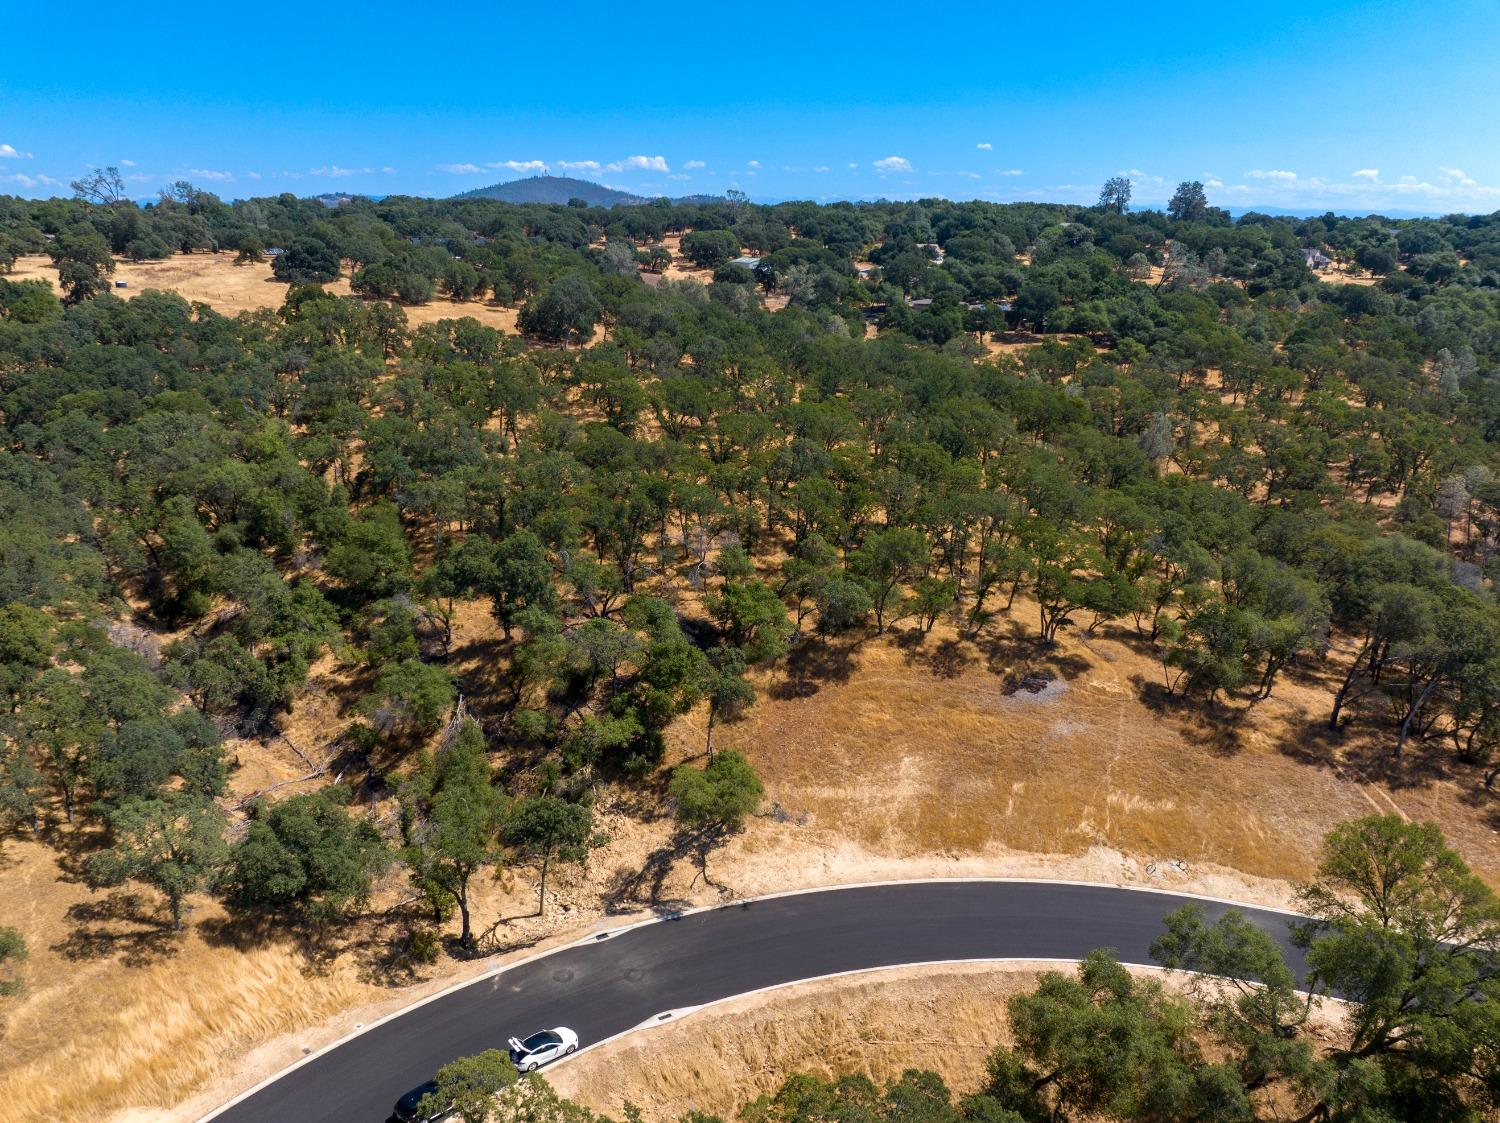 Photo of 159G - Western Sierra Wy in El Dorado Hills, CA